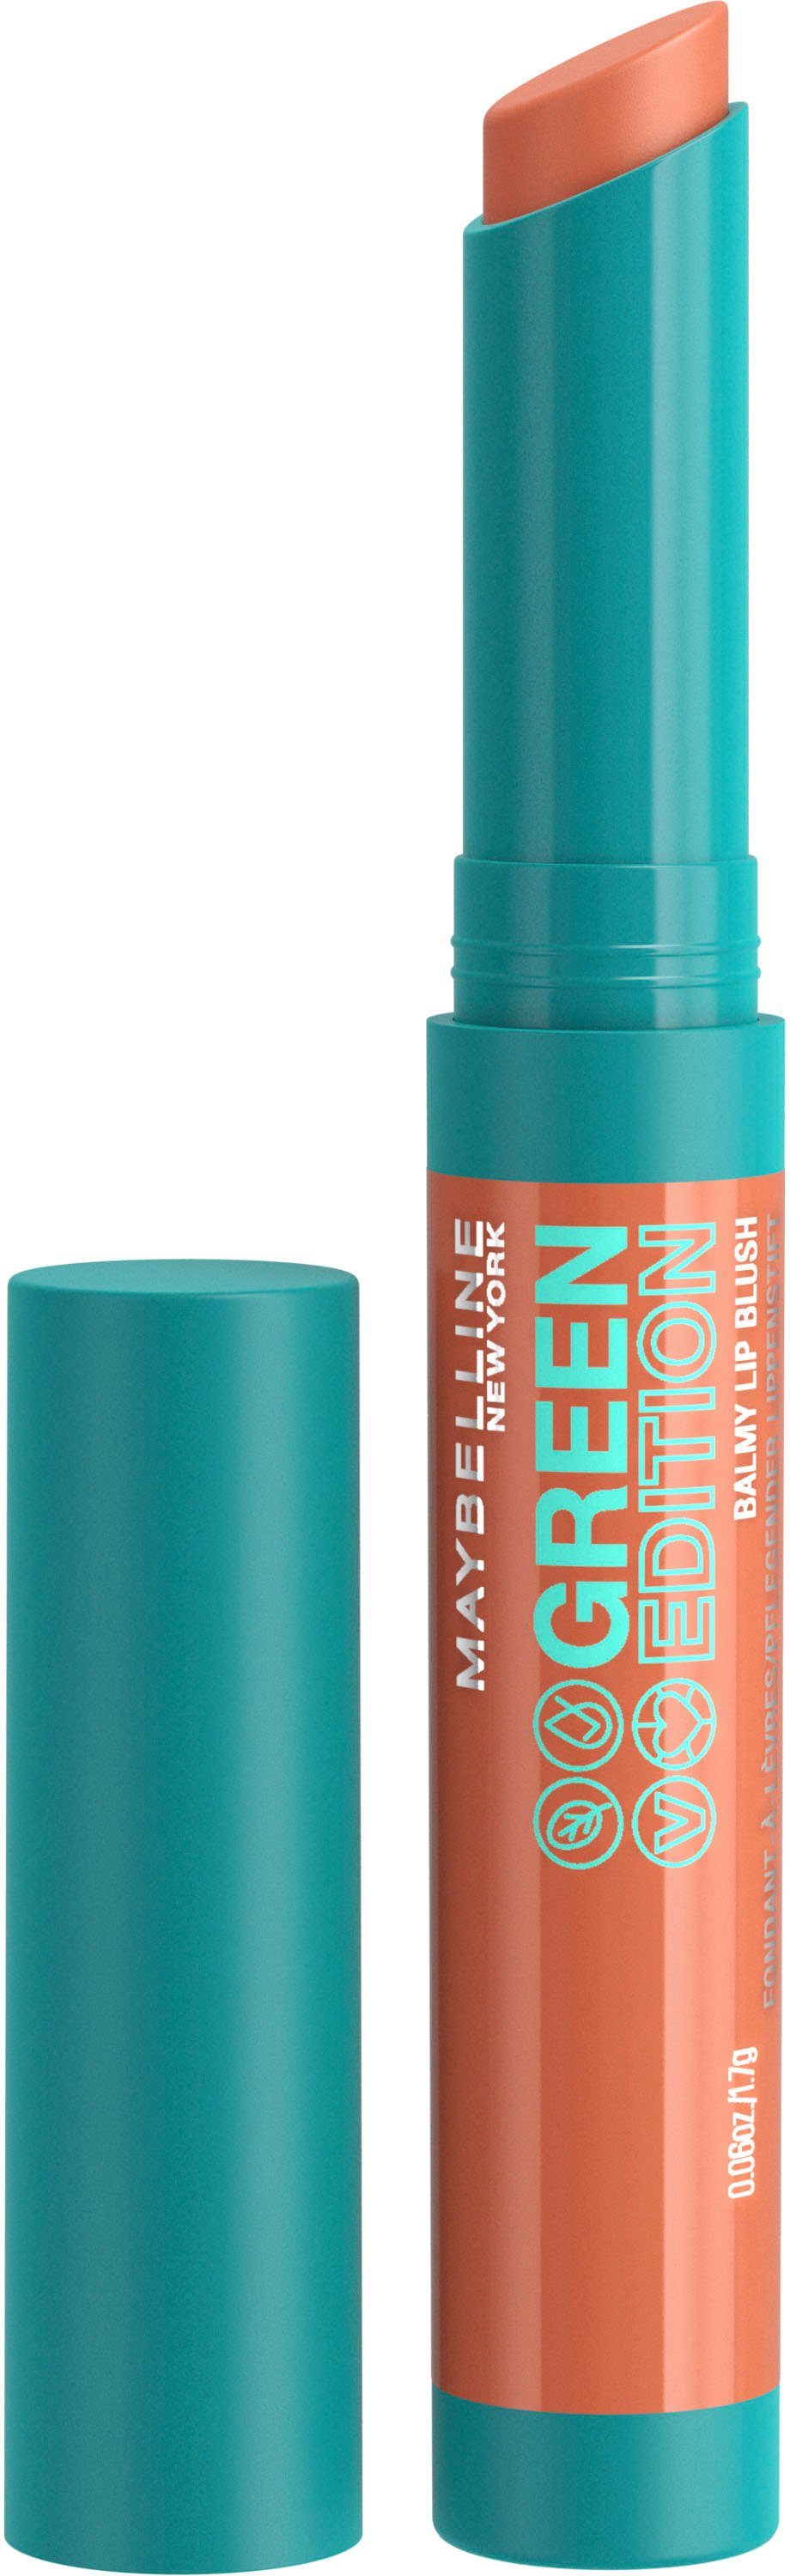 Balmy YORK Blush Edition NEW Desert Lip MAYBELLINE Green Lippenstift 008